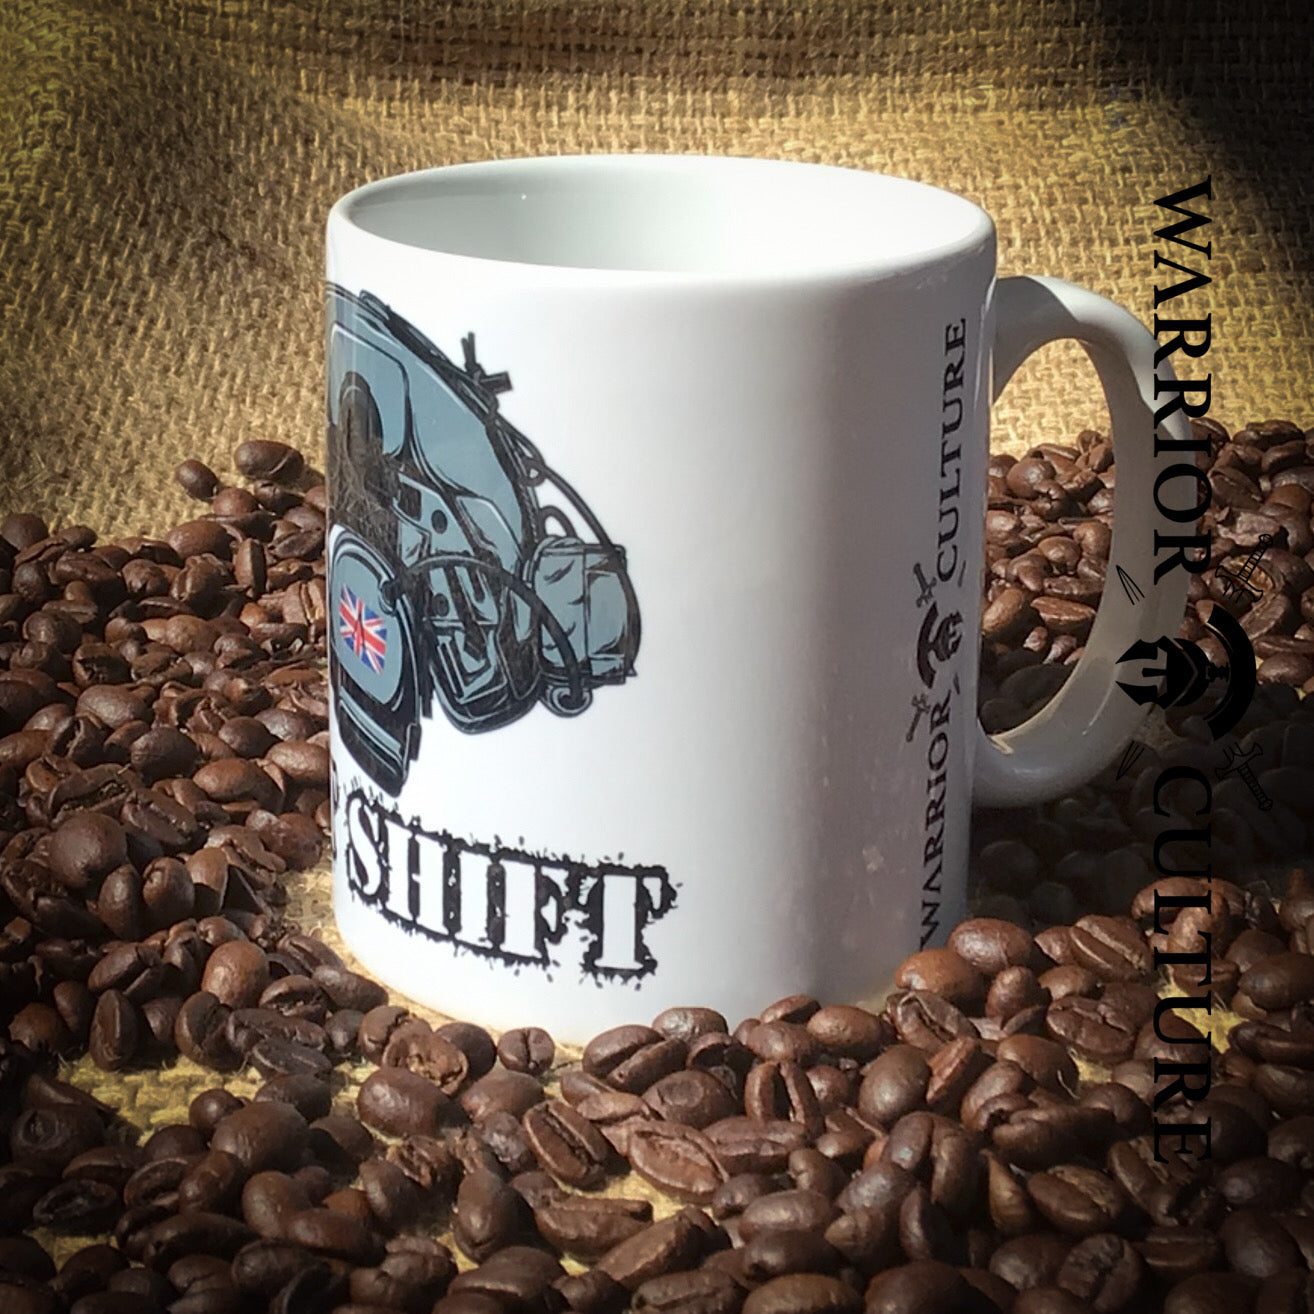 Night shift design printed on a warrior culture coffee mug